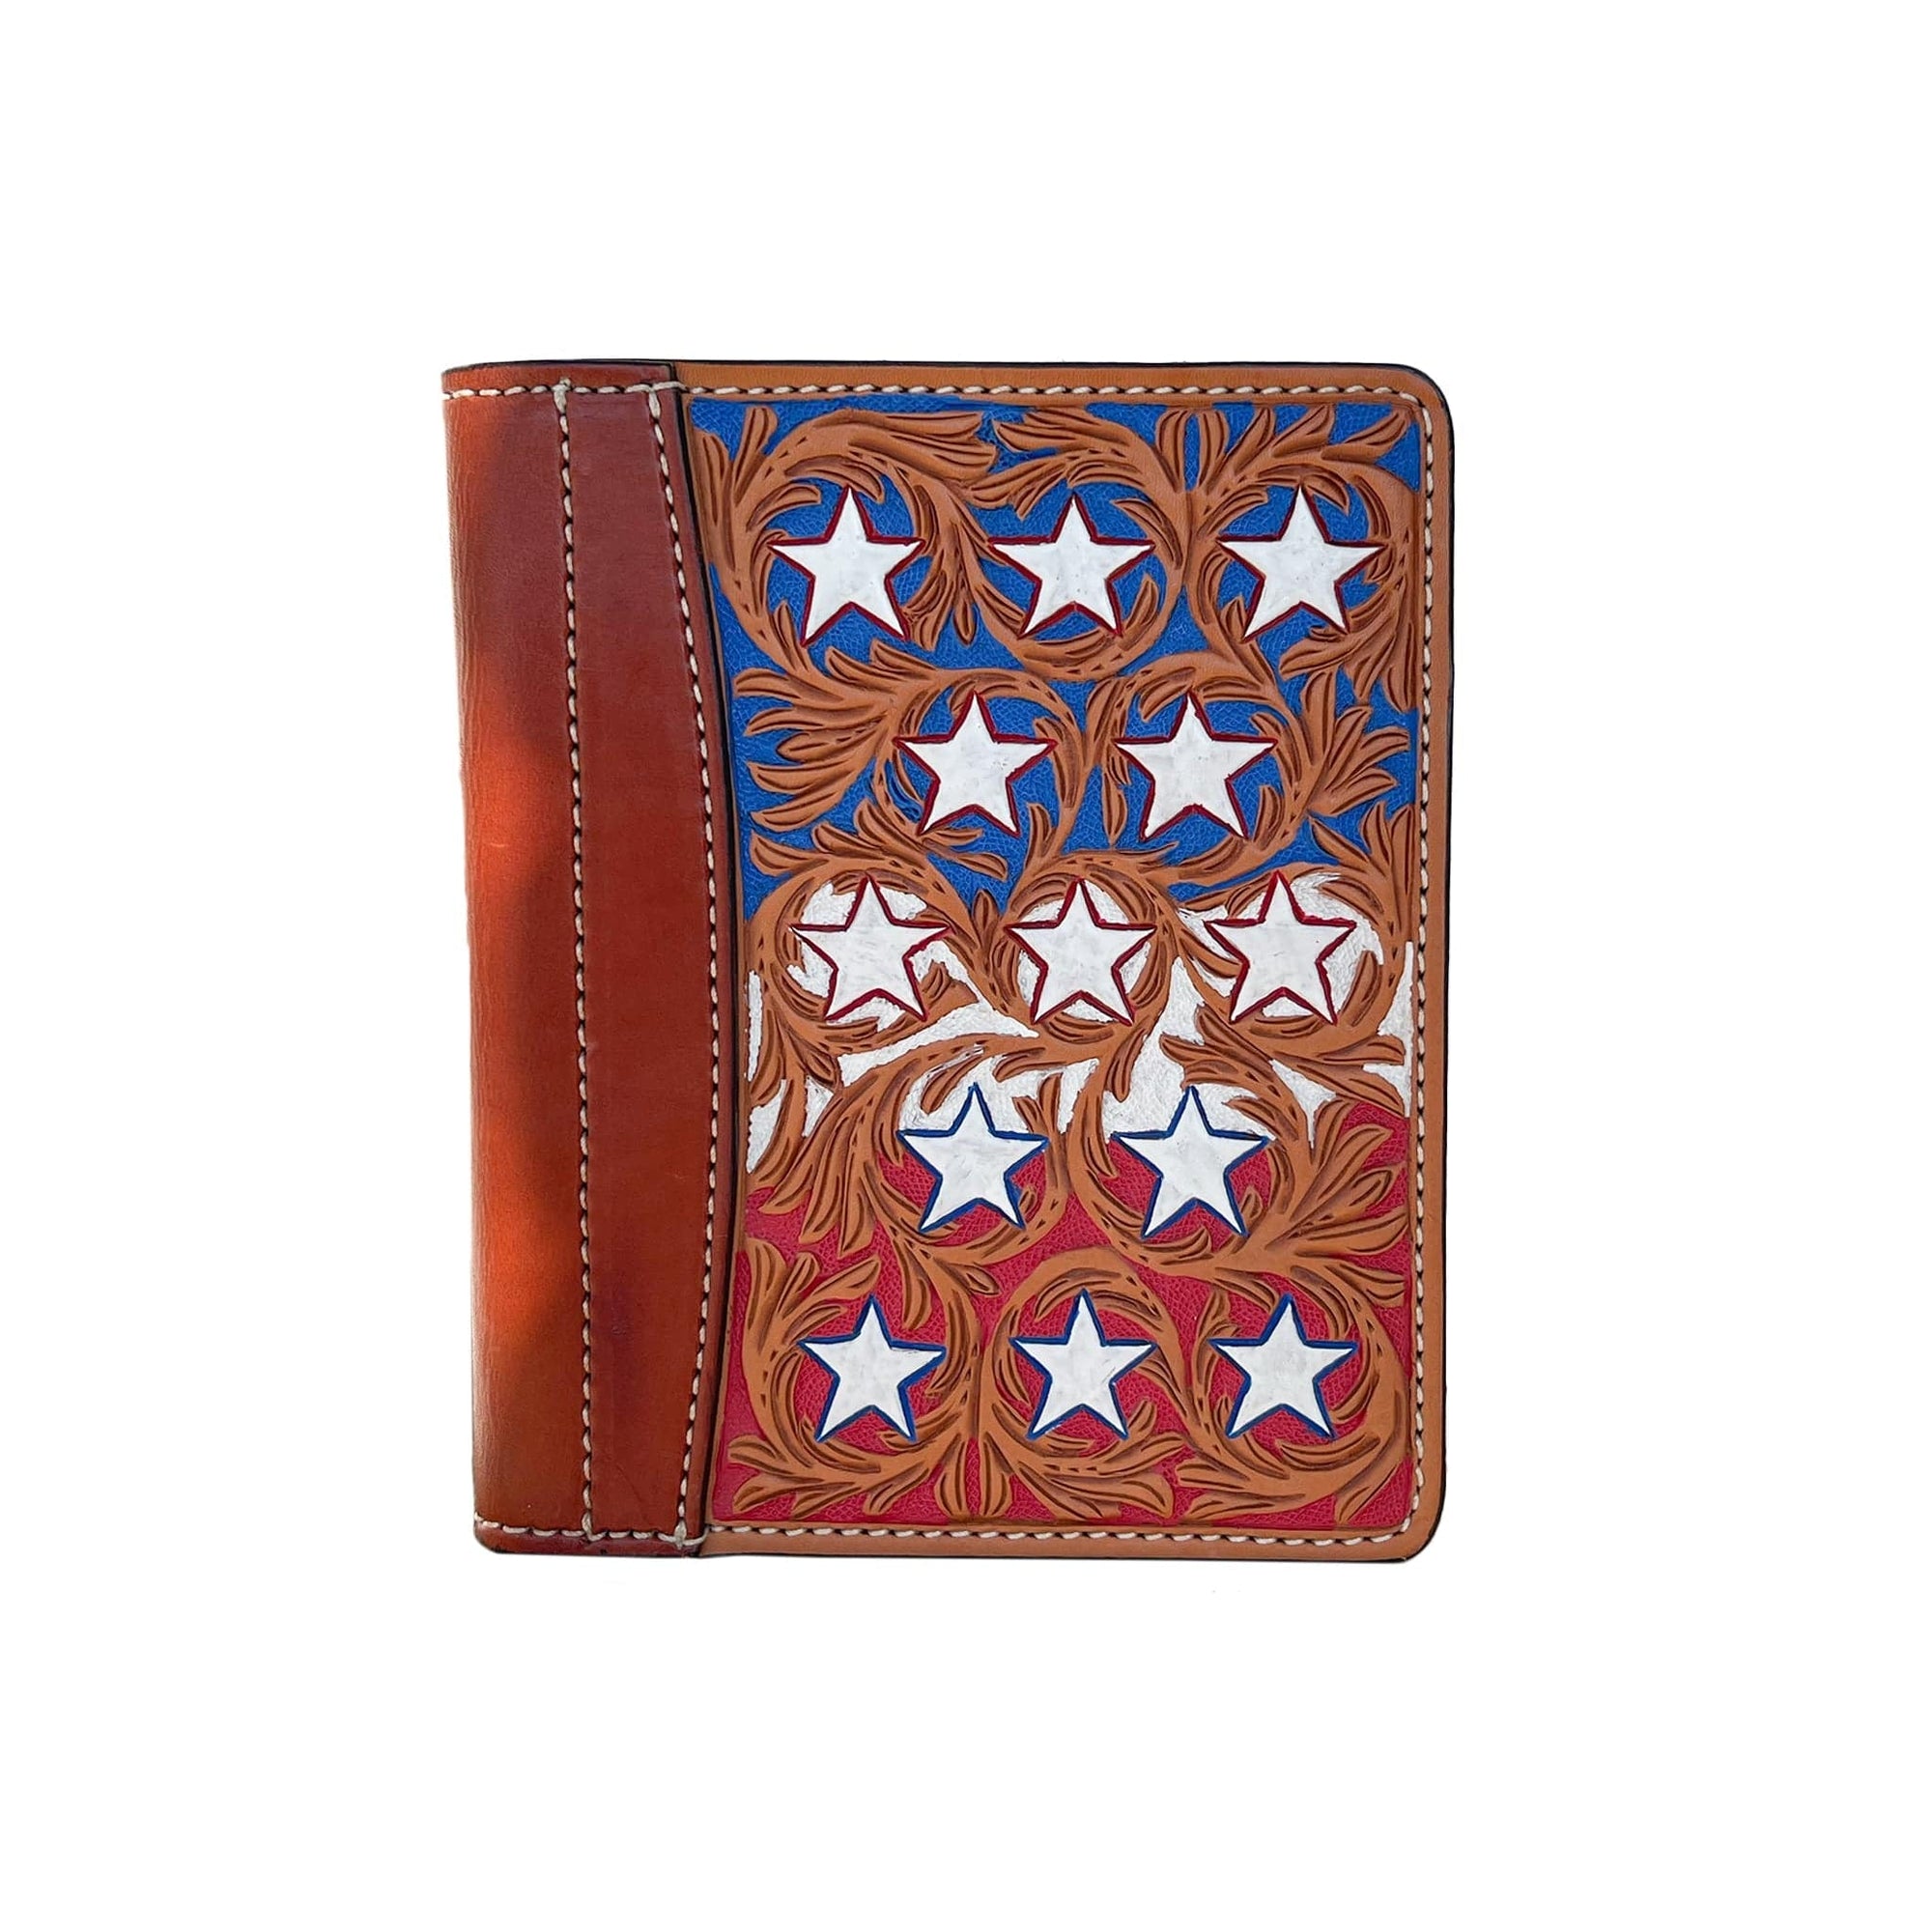 Alamo Saddlery Travel Mini portfolio golden and toast leather USA tooling